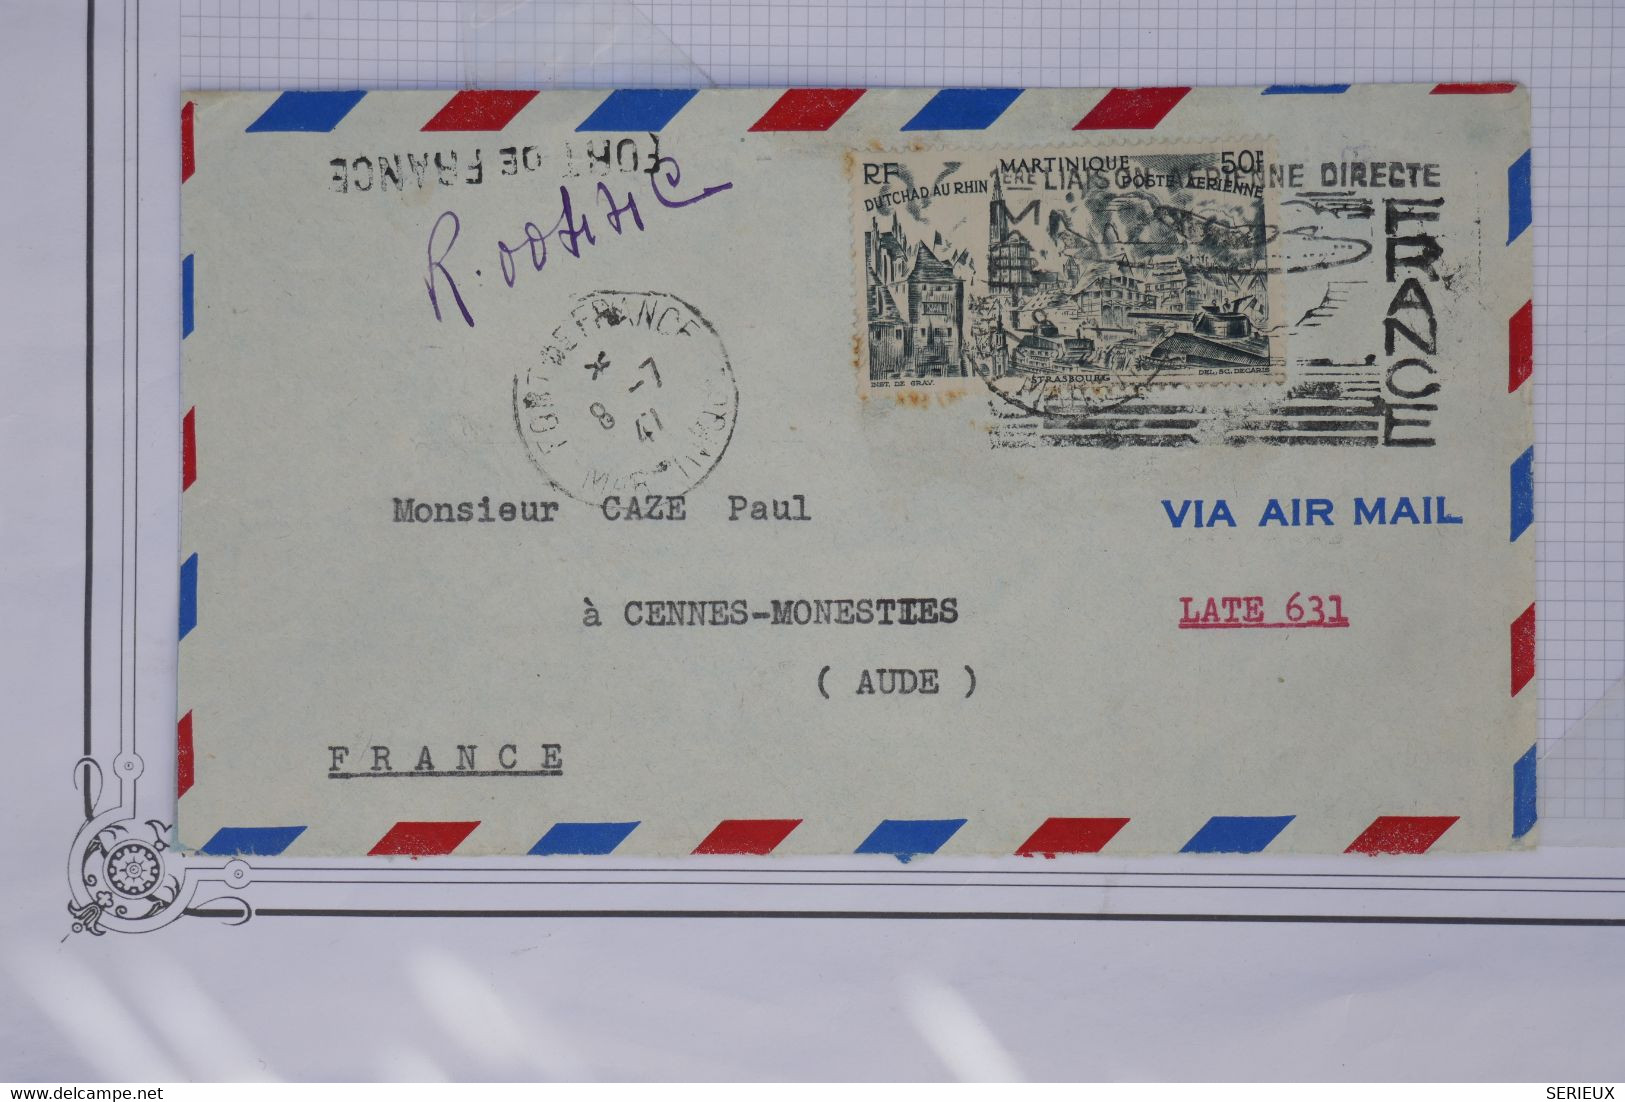 AV 2  MARTINIQUE   BELLE CARTE   1947  1ER VOL FORT DE FRANCE  +VIGNETTE+AEROPHILATELIE +++AFFRANC. PLAISANT - Airmail